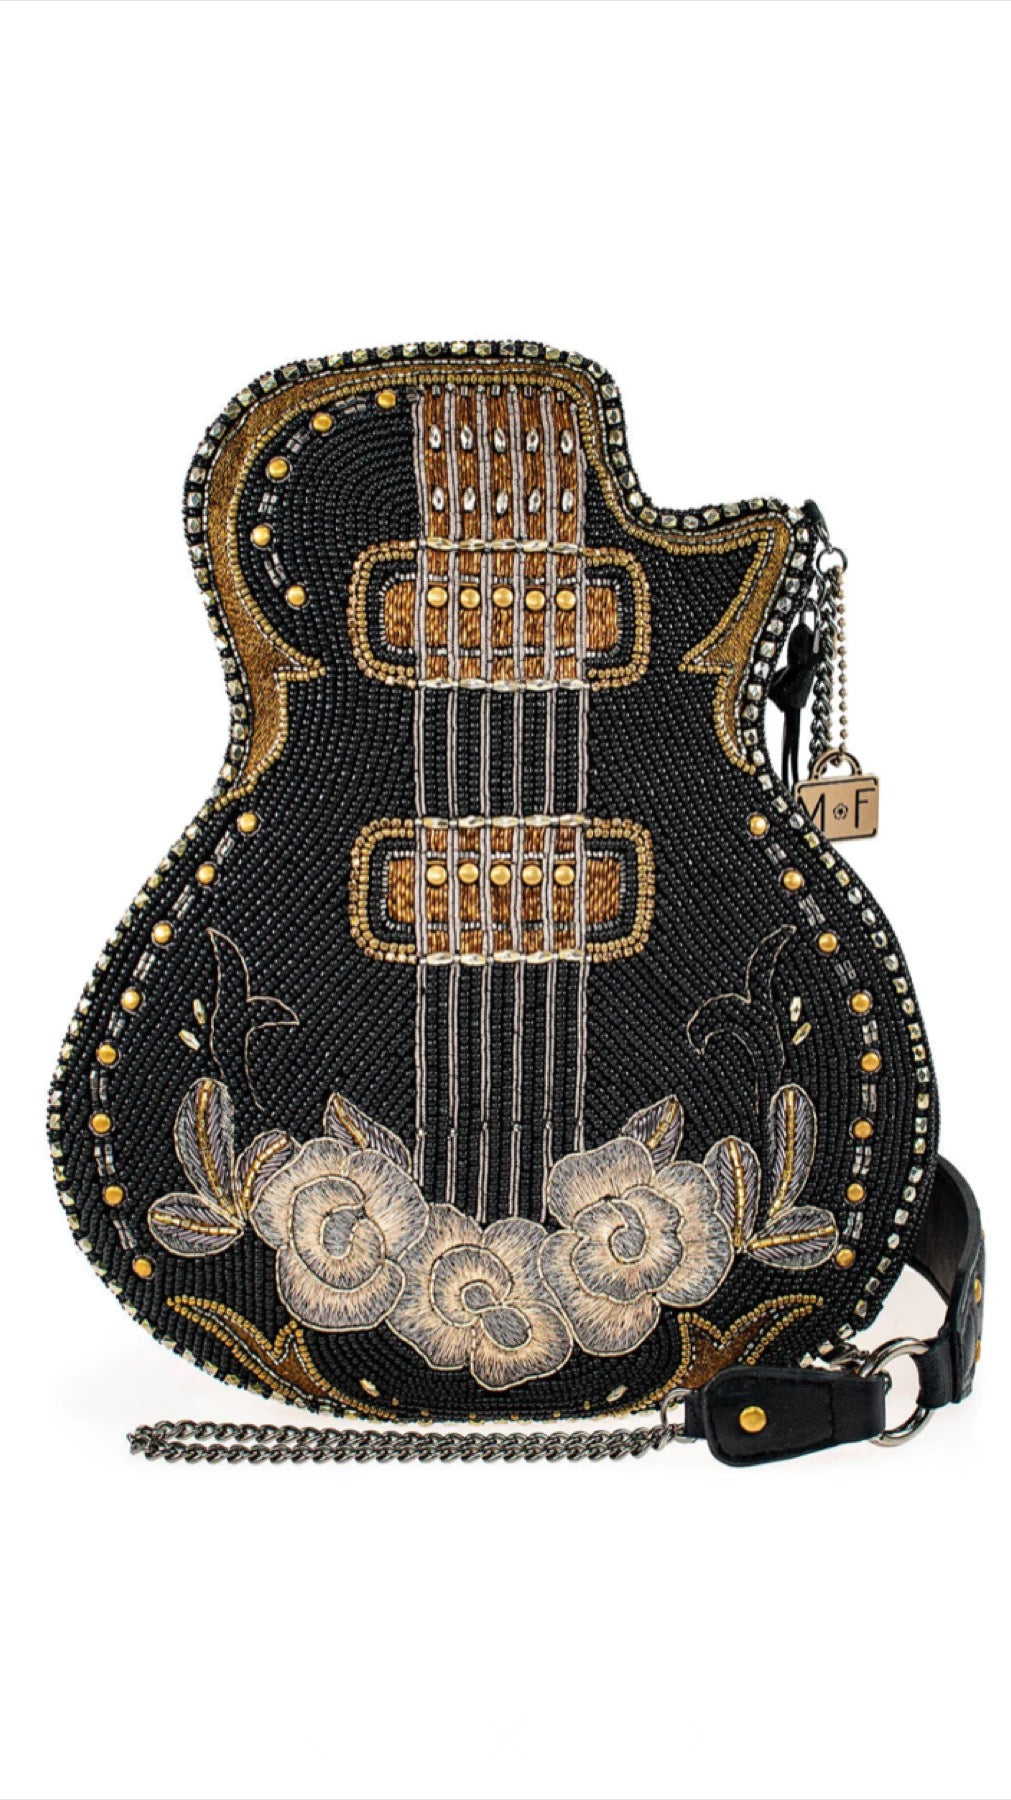 Mary Frances Pretty Music Guitar Handbag   Mary Frances Beaded Bag